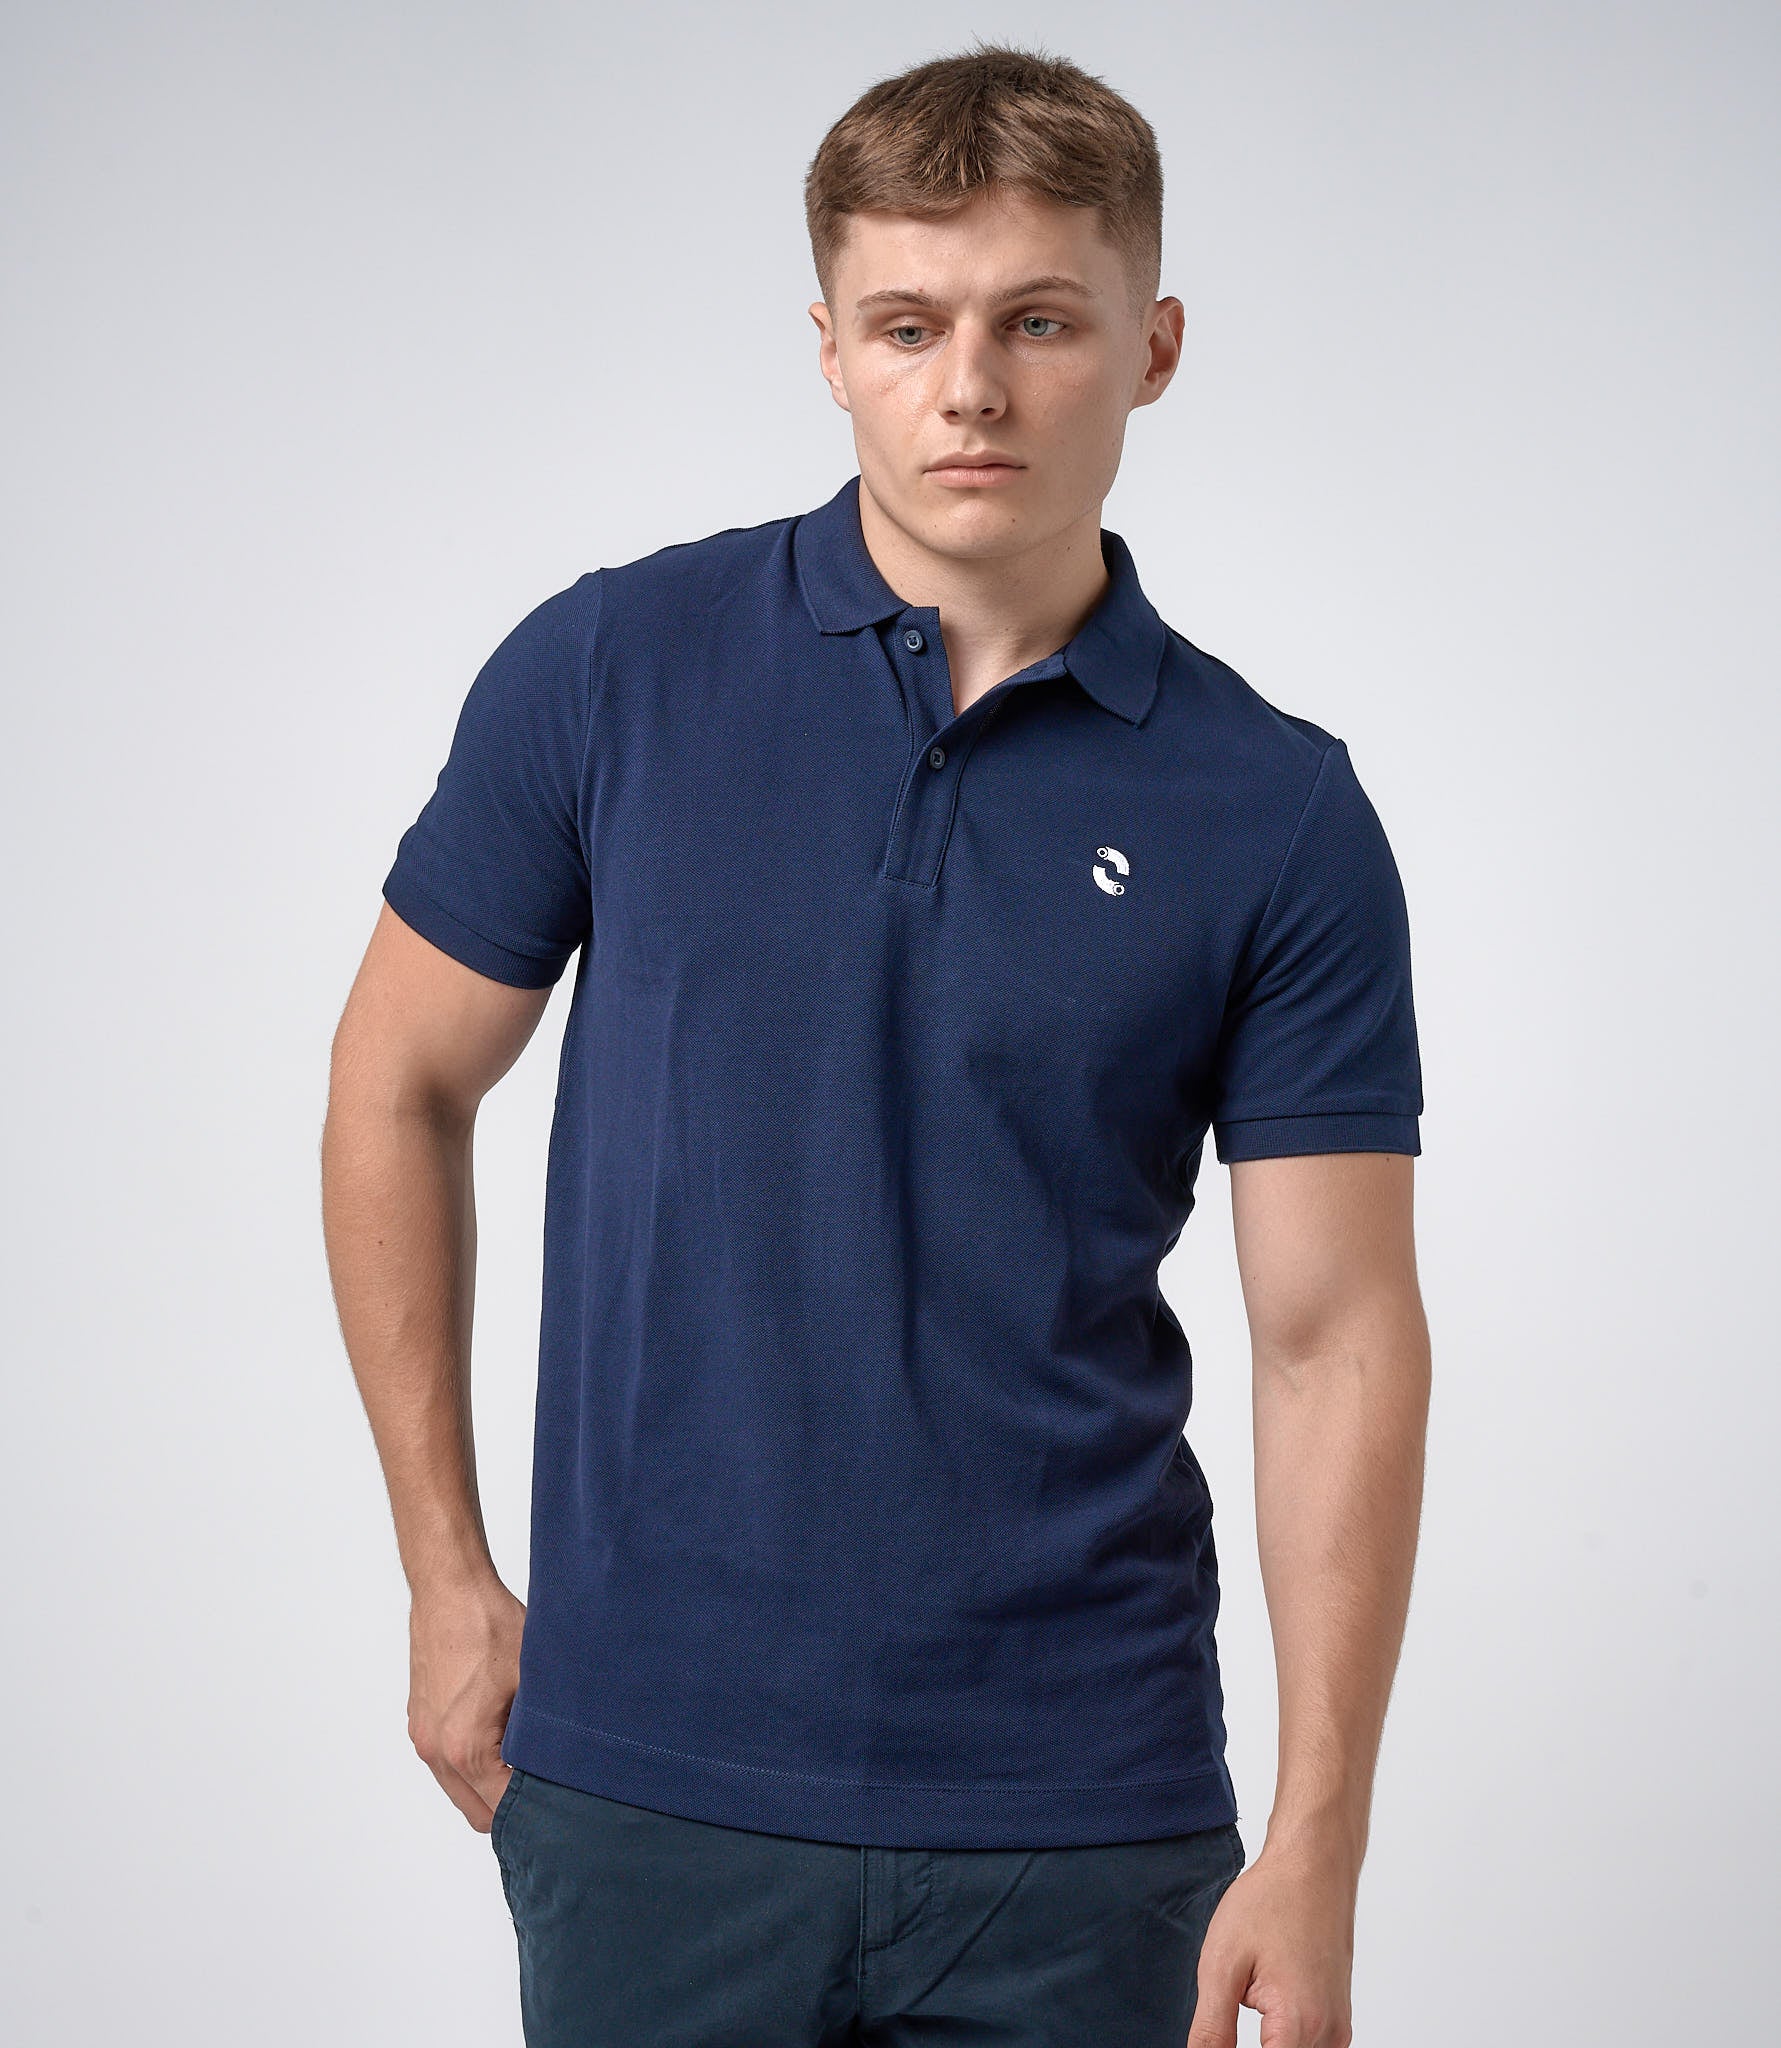 Omnitau Men's Hybrid Organic Cotton Polo Shirt - French Navy